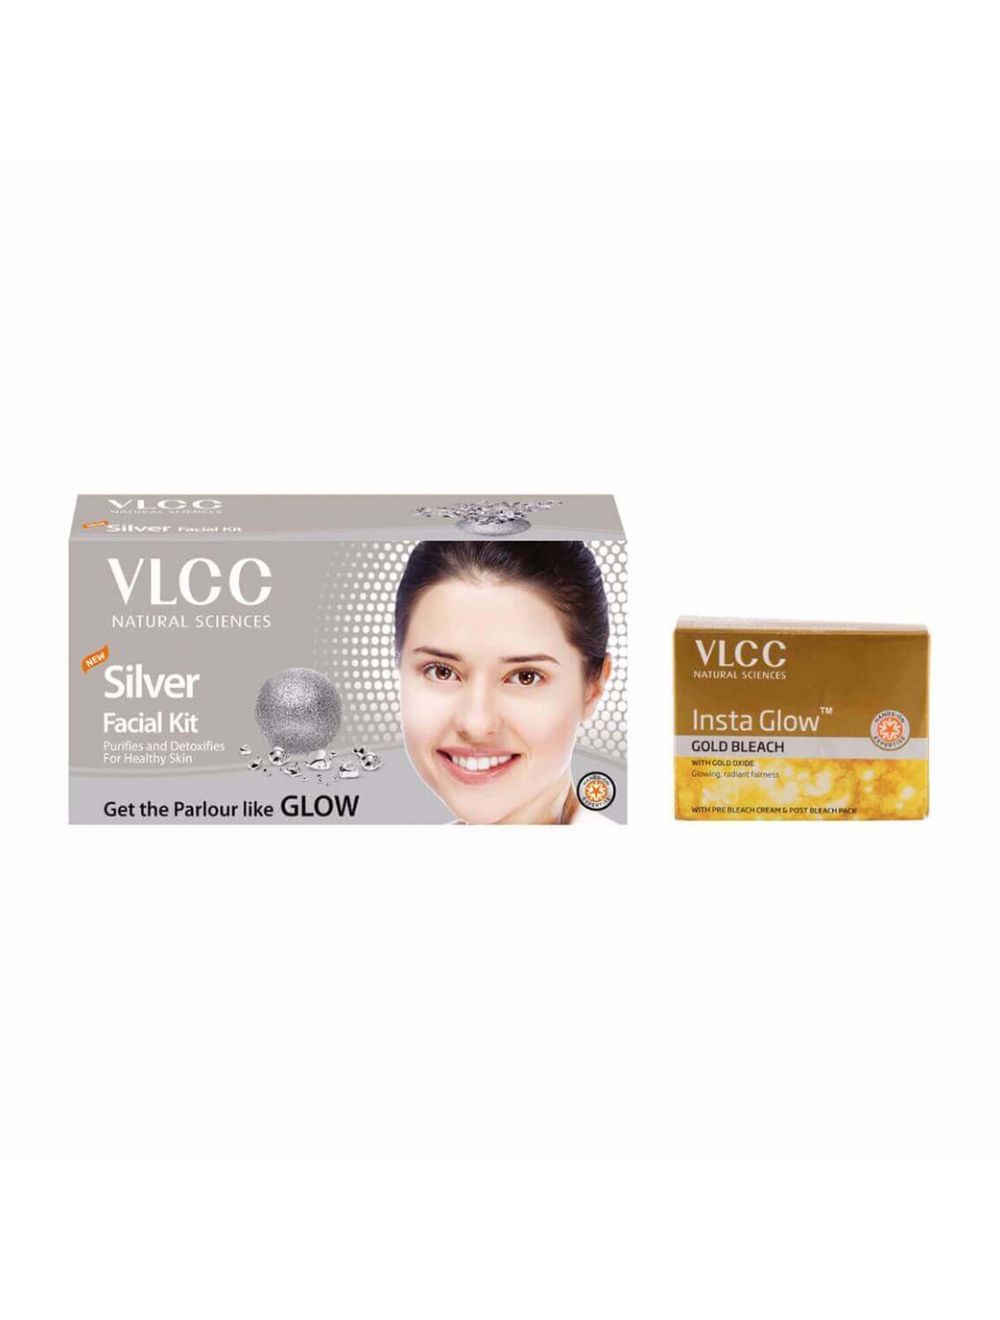 VLCC Silver Facial Kit & Insta Glow Gold Bleach Combo - Niram